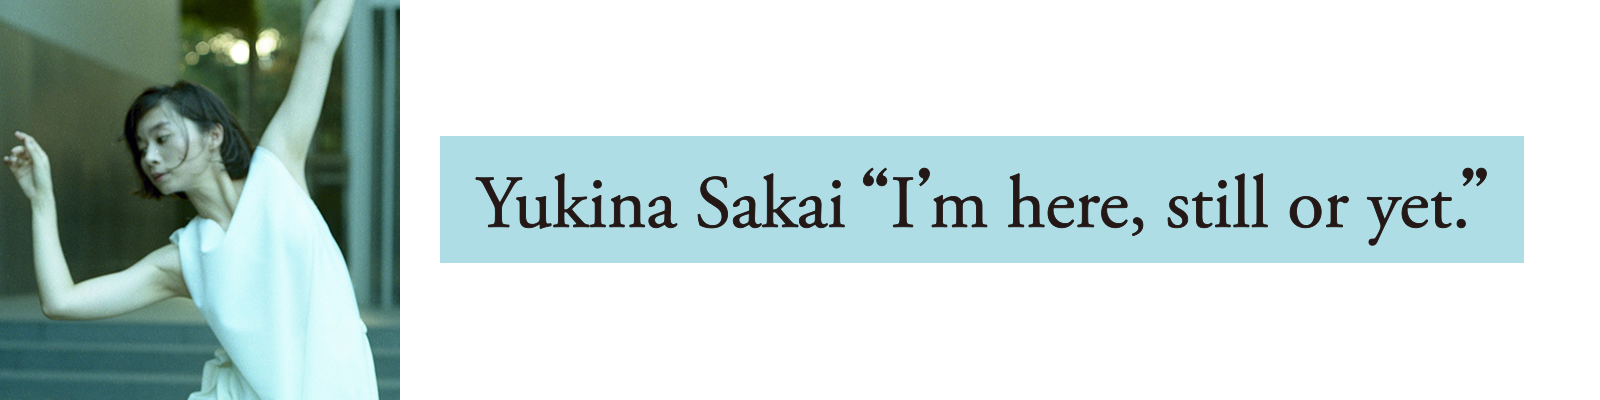 “I’m here, still or yet.” By Yukina Sakai